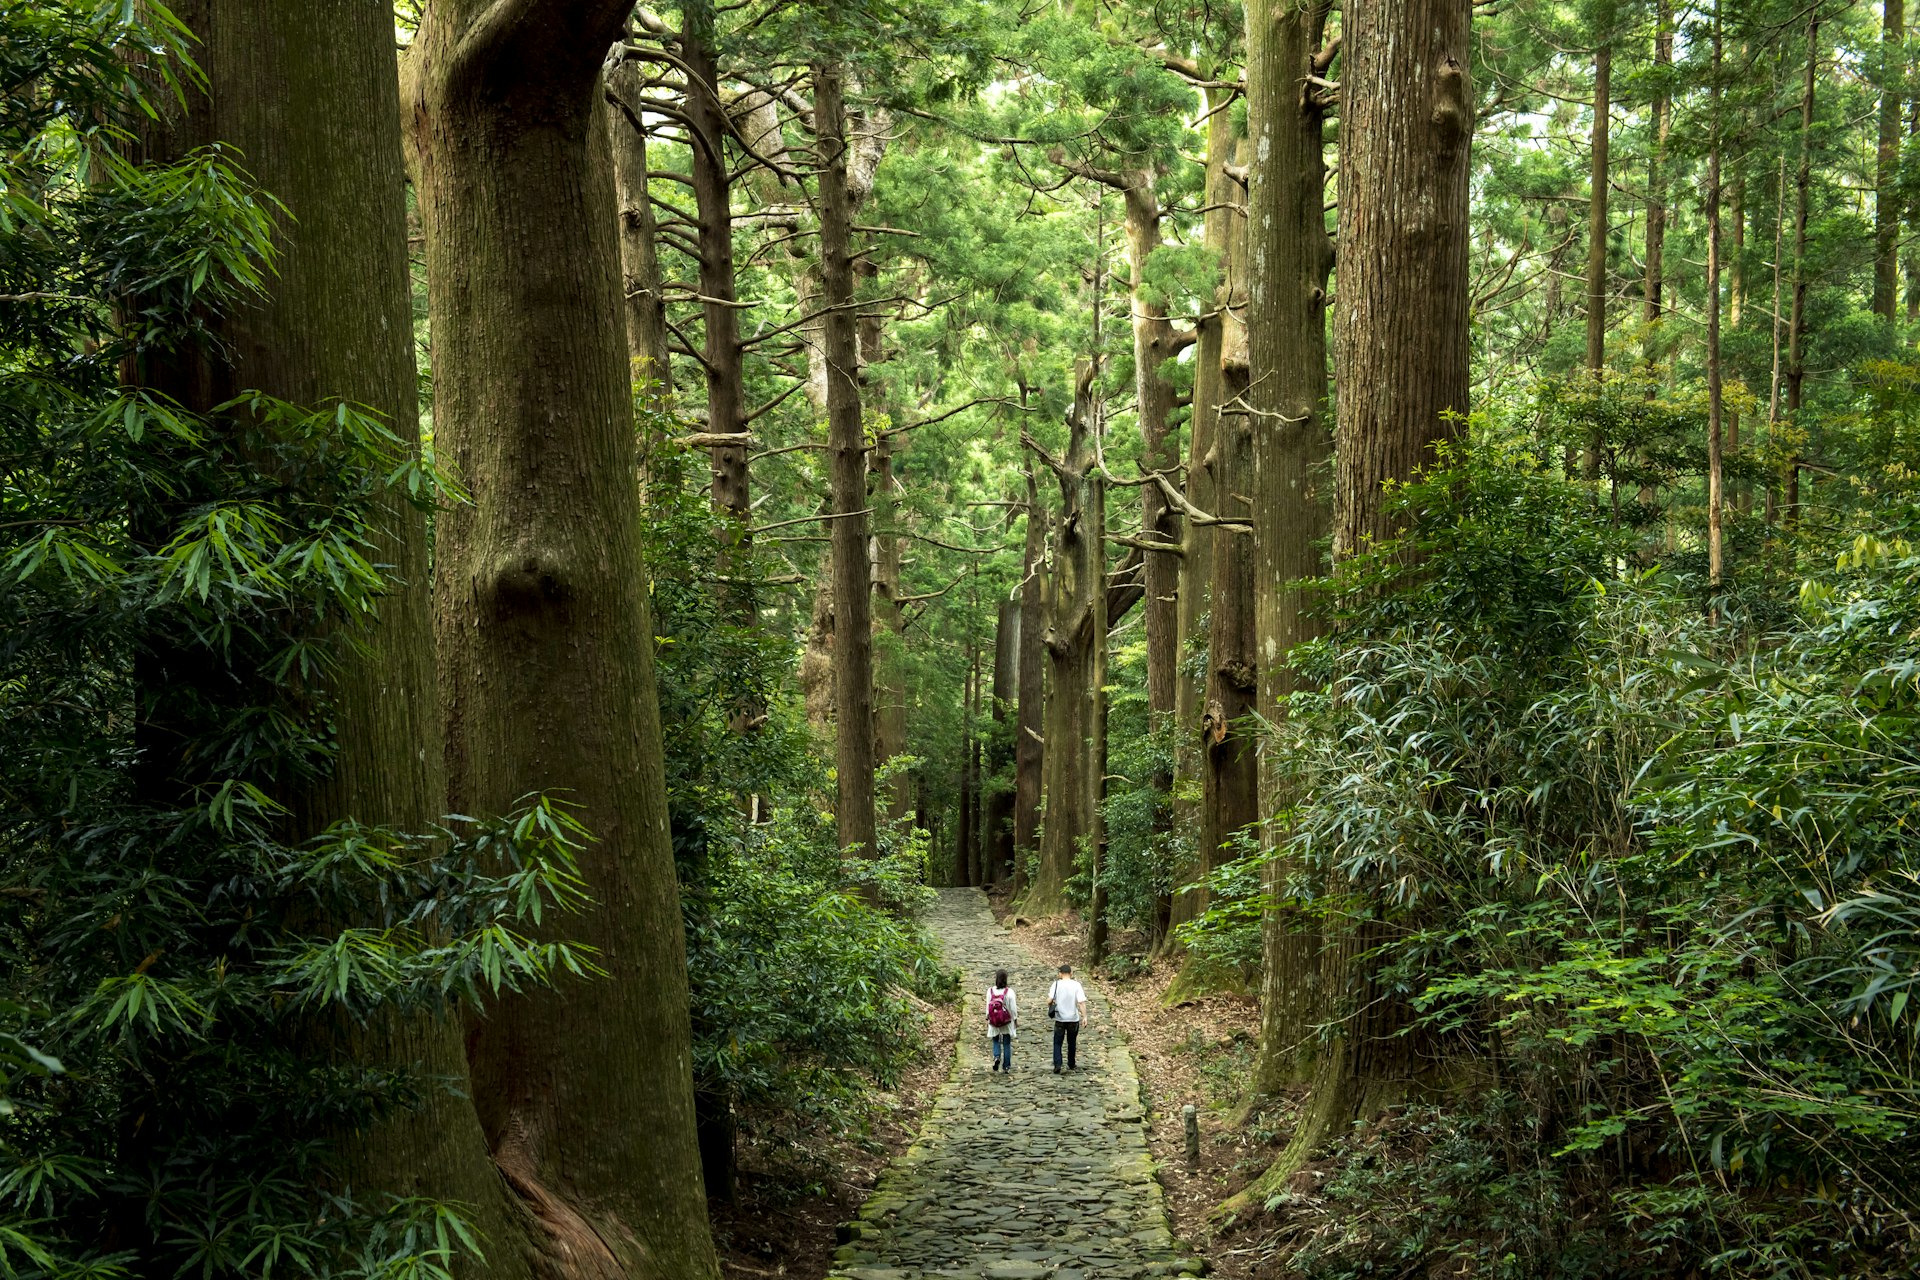 People walk on Kumano Kodo (pilgrimage trail) through woods in Kumano, Japan